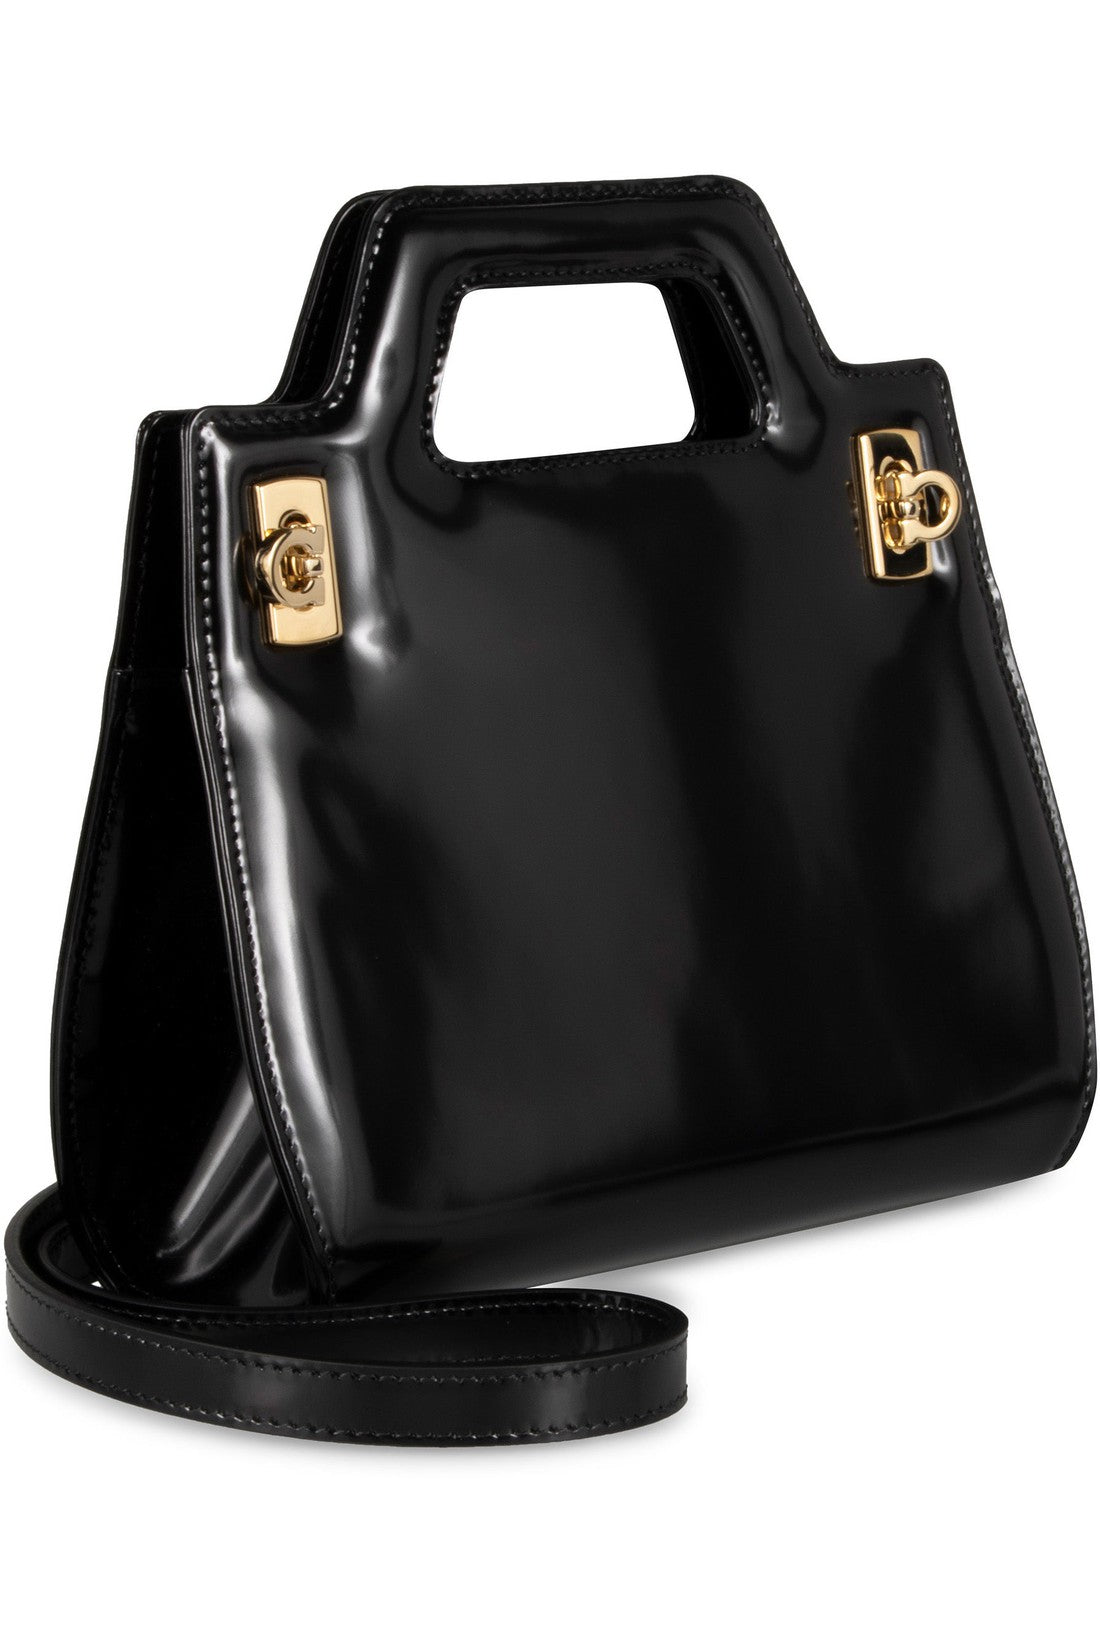 FERRAGAMO-OUTLET-SALE-Wanda mini handbag-ARCHIVIST